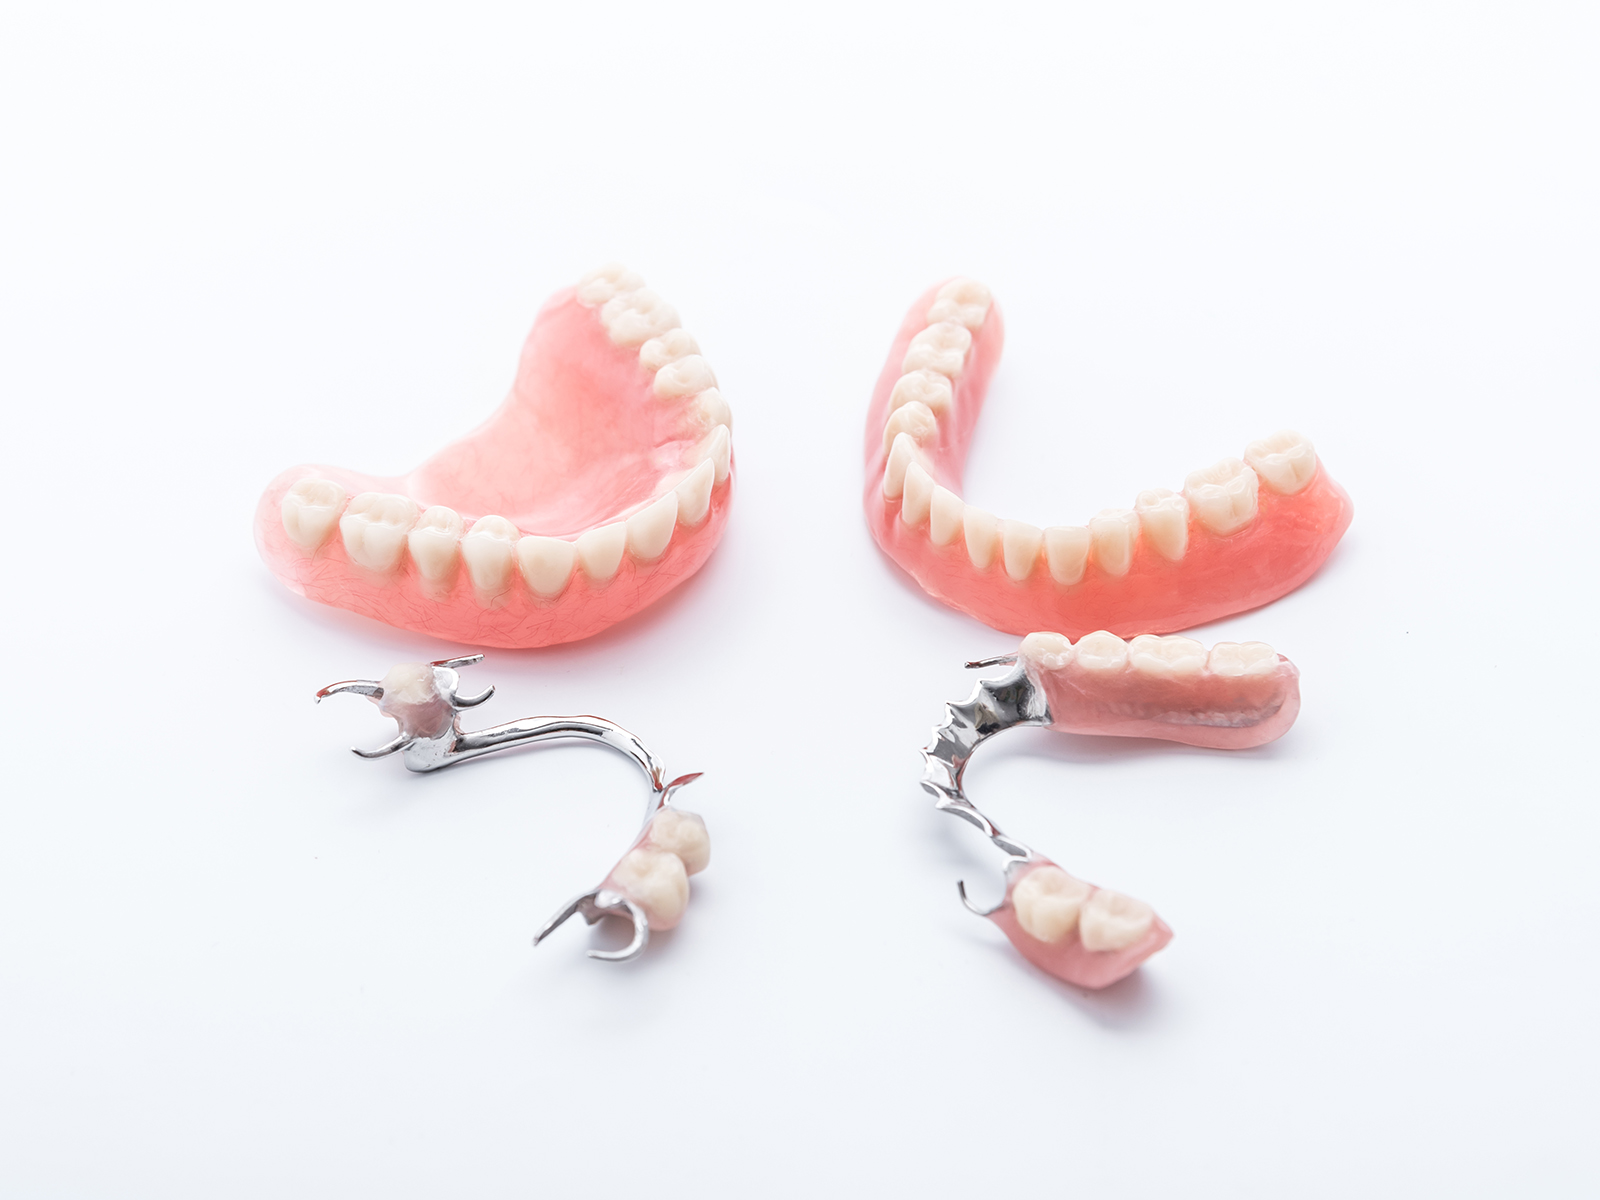 What Is Better Plastic Or Metal Dentures?